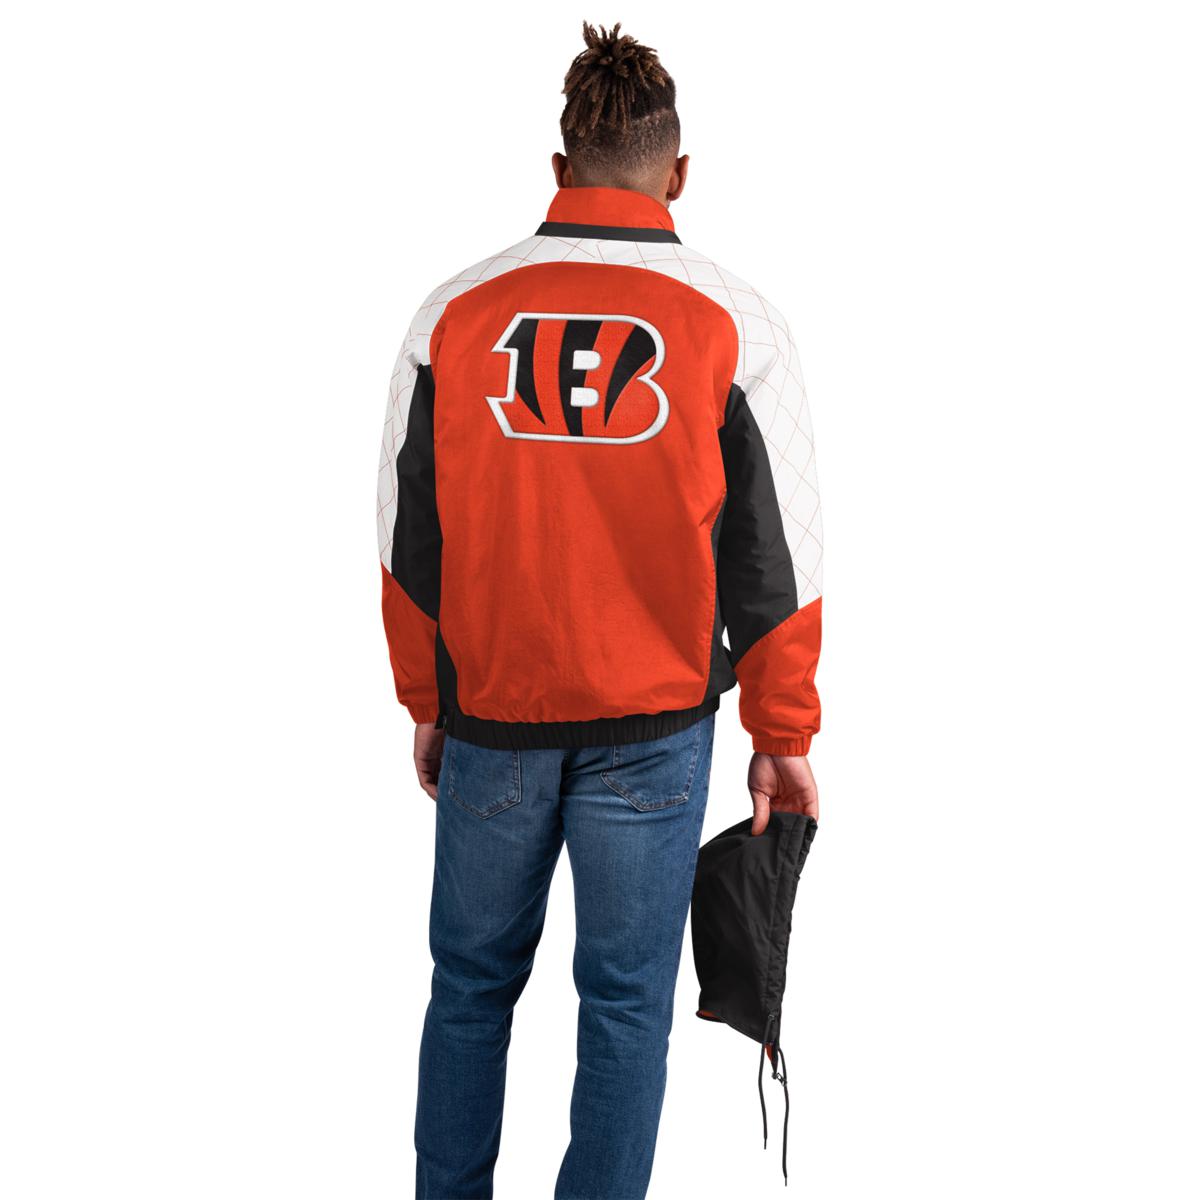 Officially Licensed NFL Men's Starter Breakaway Jacket by Glll - Bengals